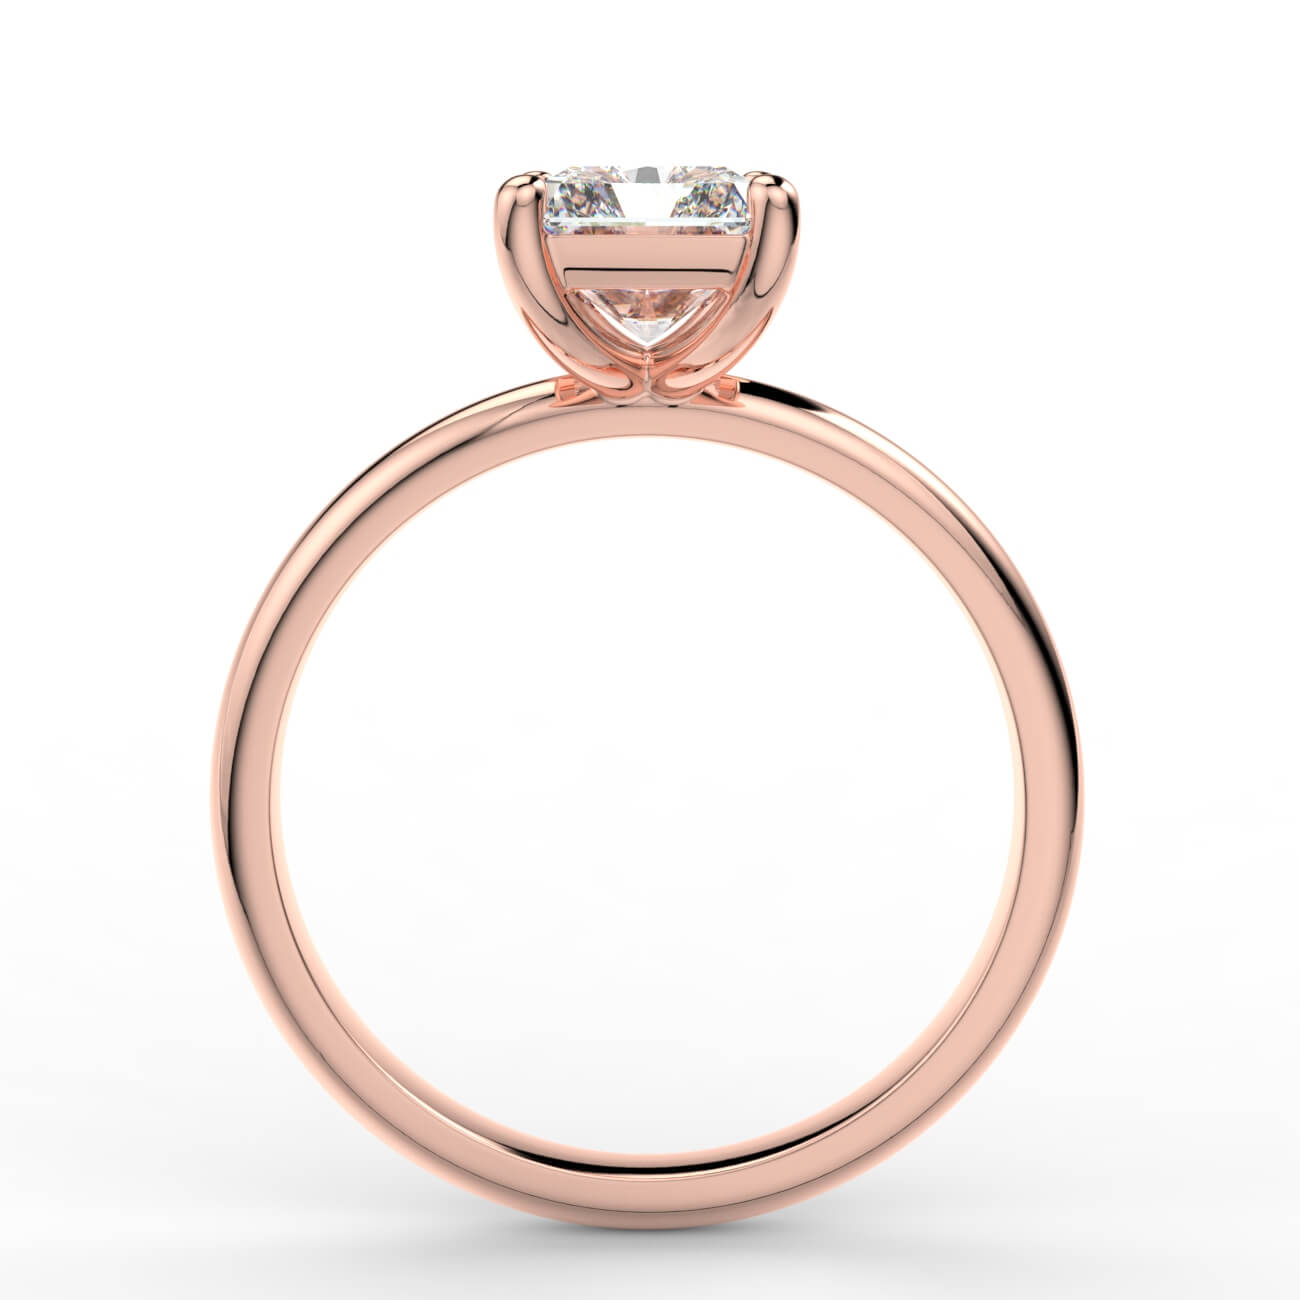 Solitaire radiant cut diamond engagement ring in rose gold – Australian Diamond Network